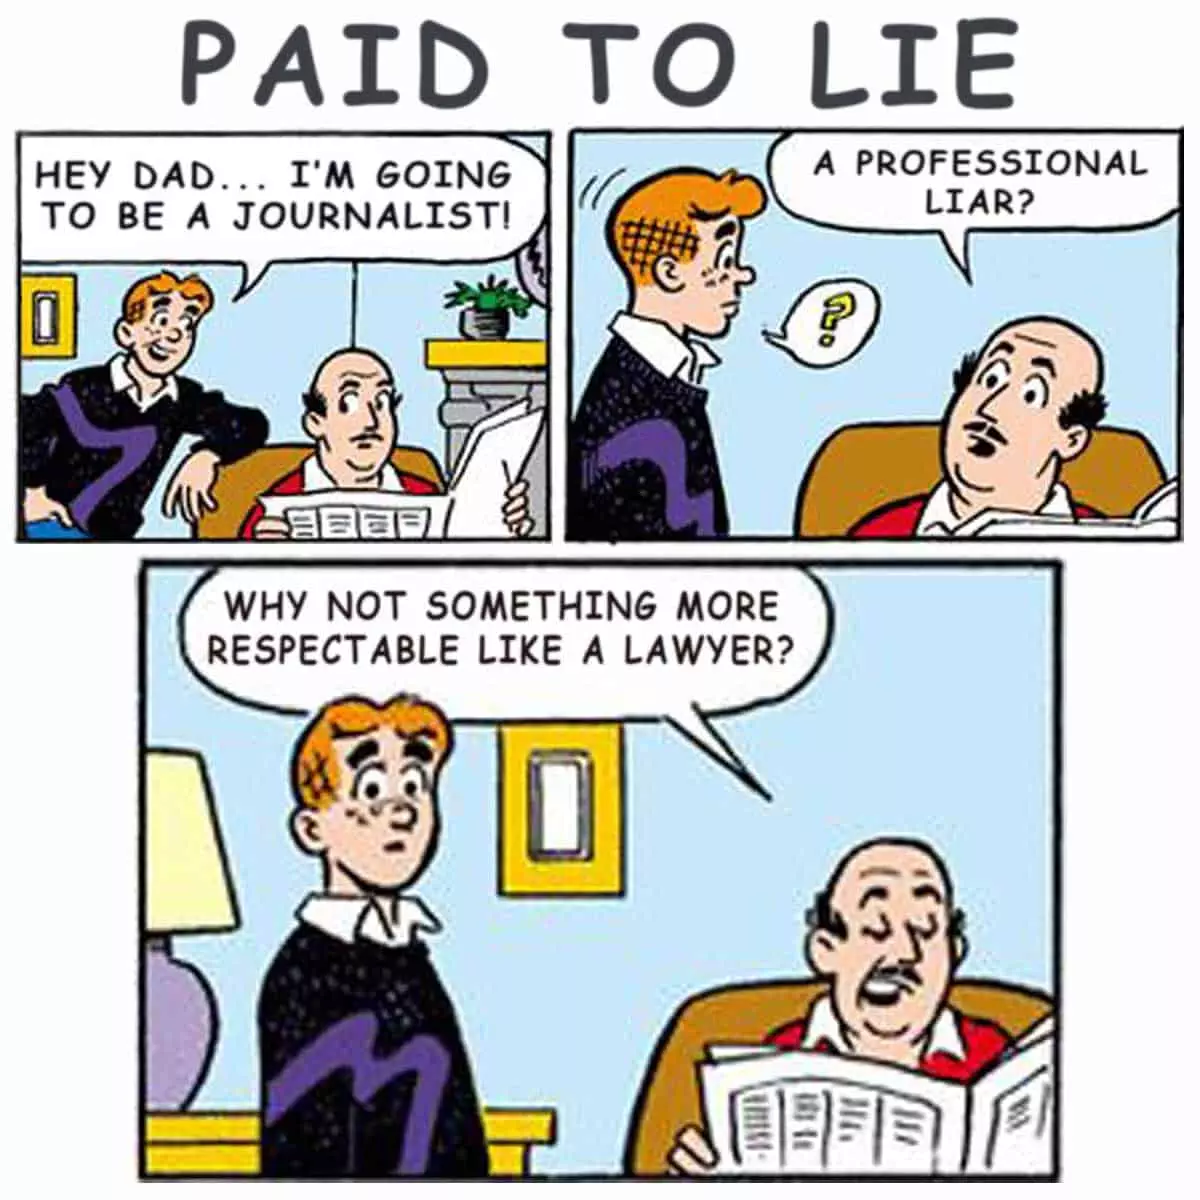 Be a Journalist – AKA Professional Liar